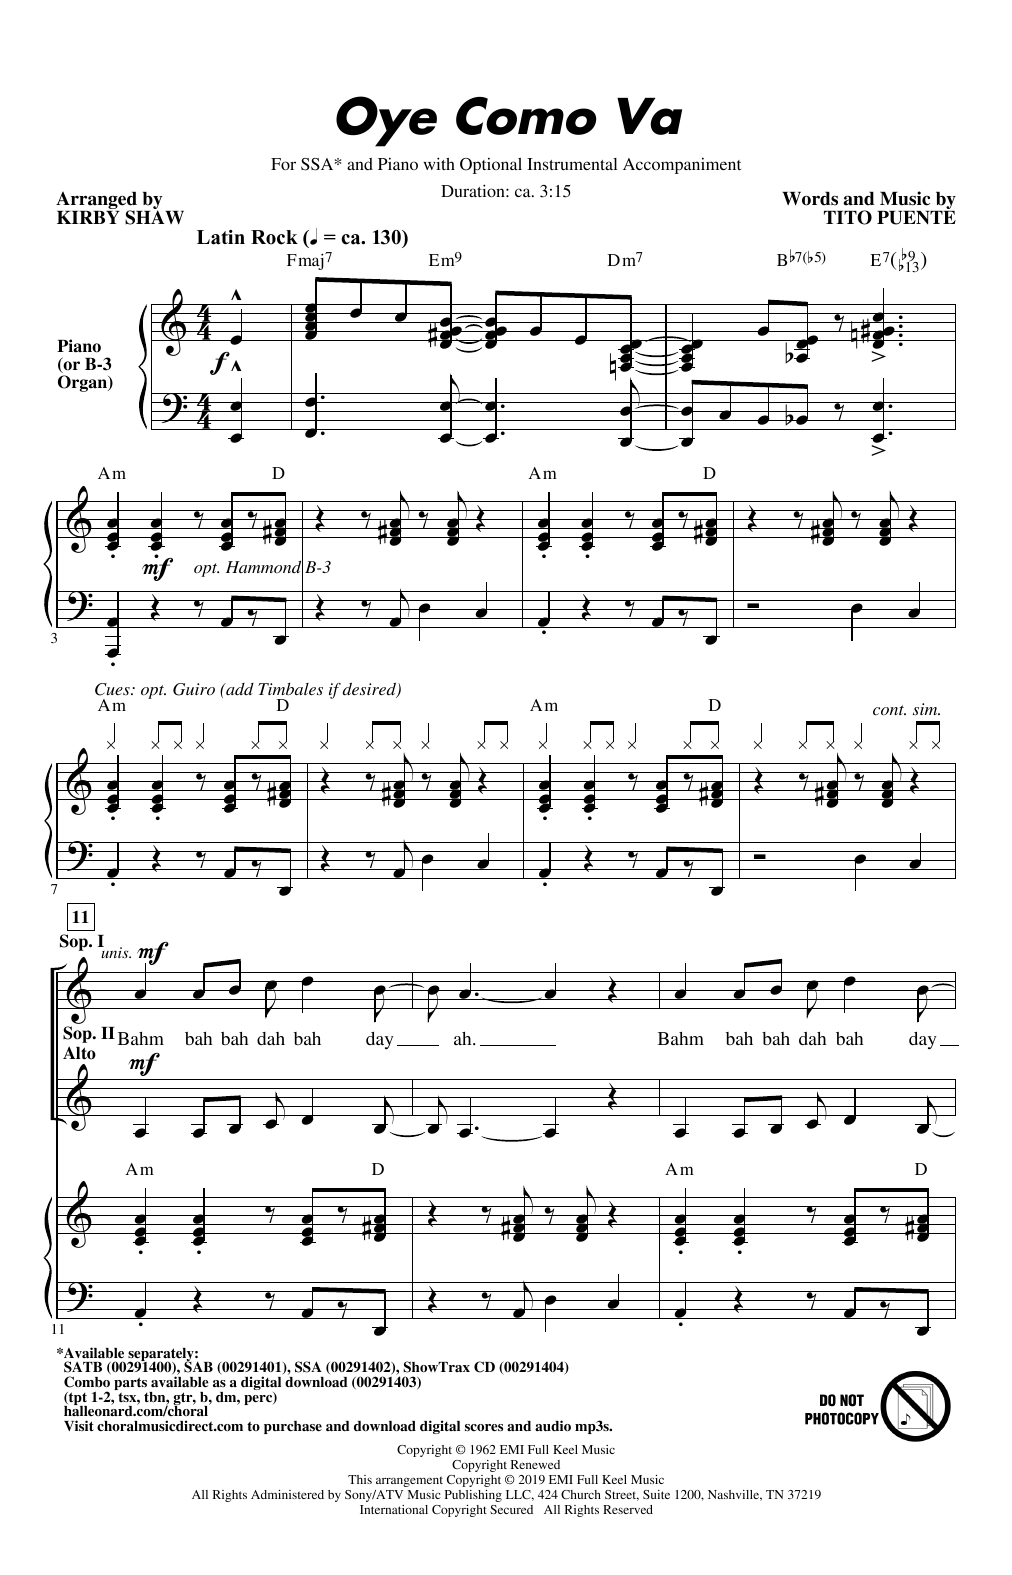 Santana Oye Como Va (arr. Kirby Shaw) Sheet Music Notes & Chords for SATB Choir - Download or Print PDF